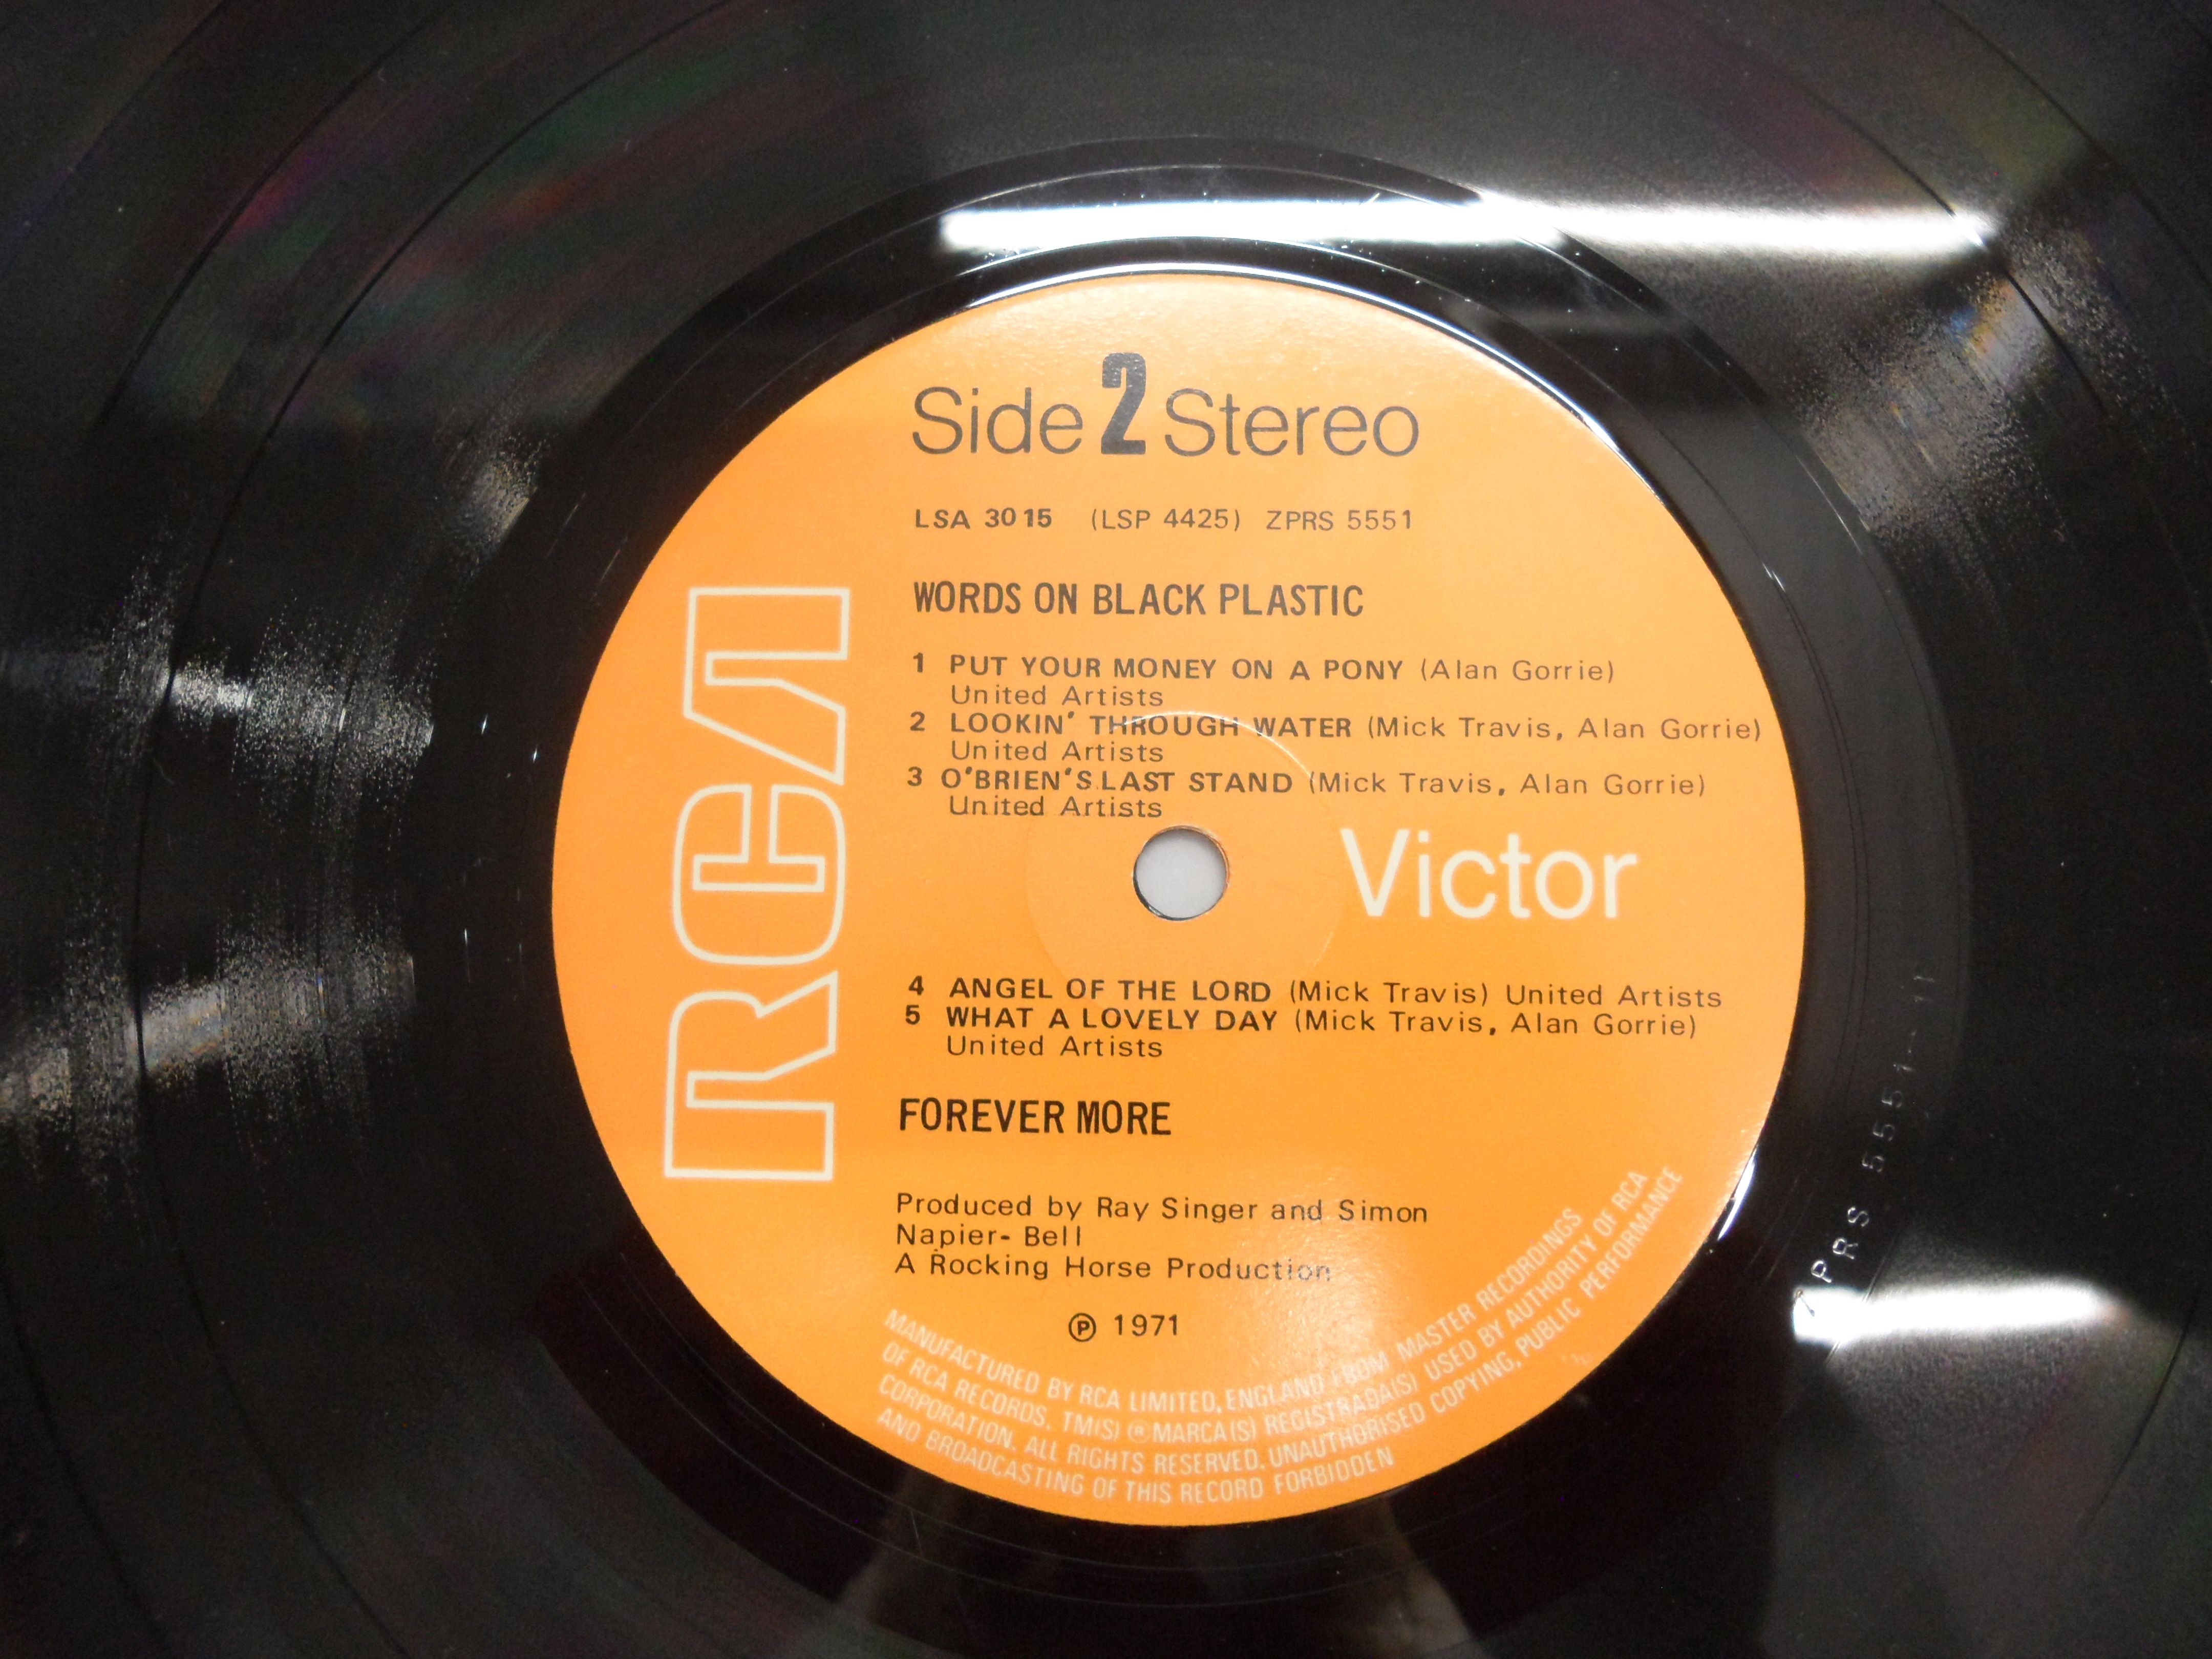 Vinyl - Forever More Words On Black Plastic LP on RCA Victor LSA31015, vinyl vg+, sleeves vg+ - Image 6 of 6